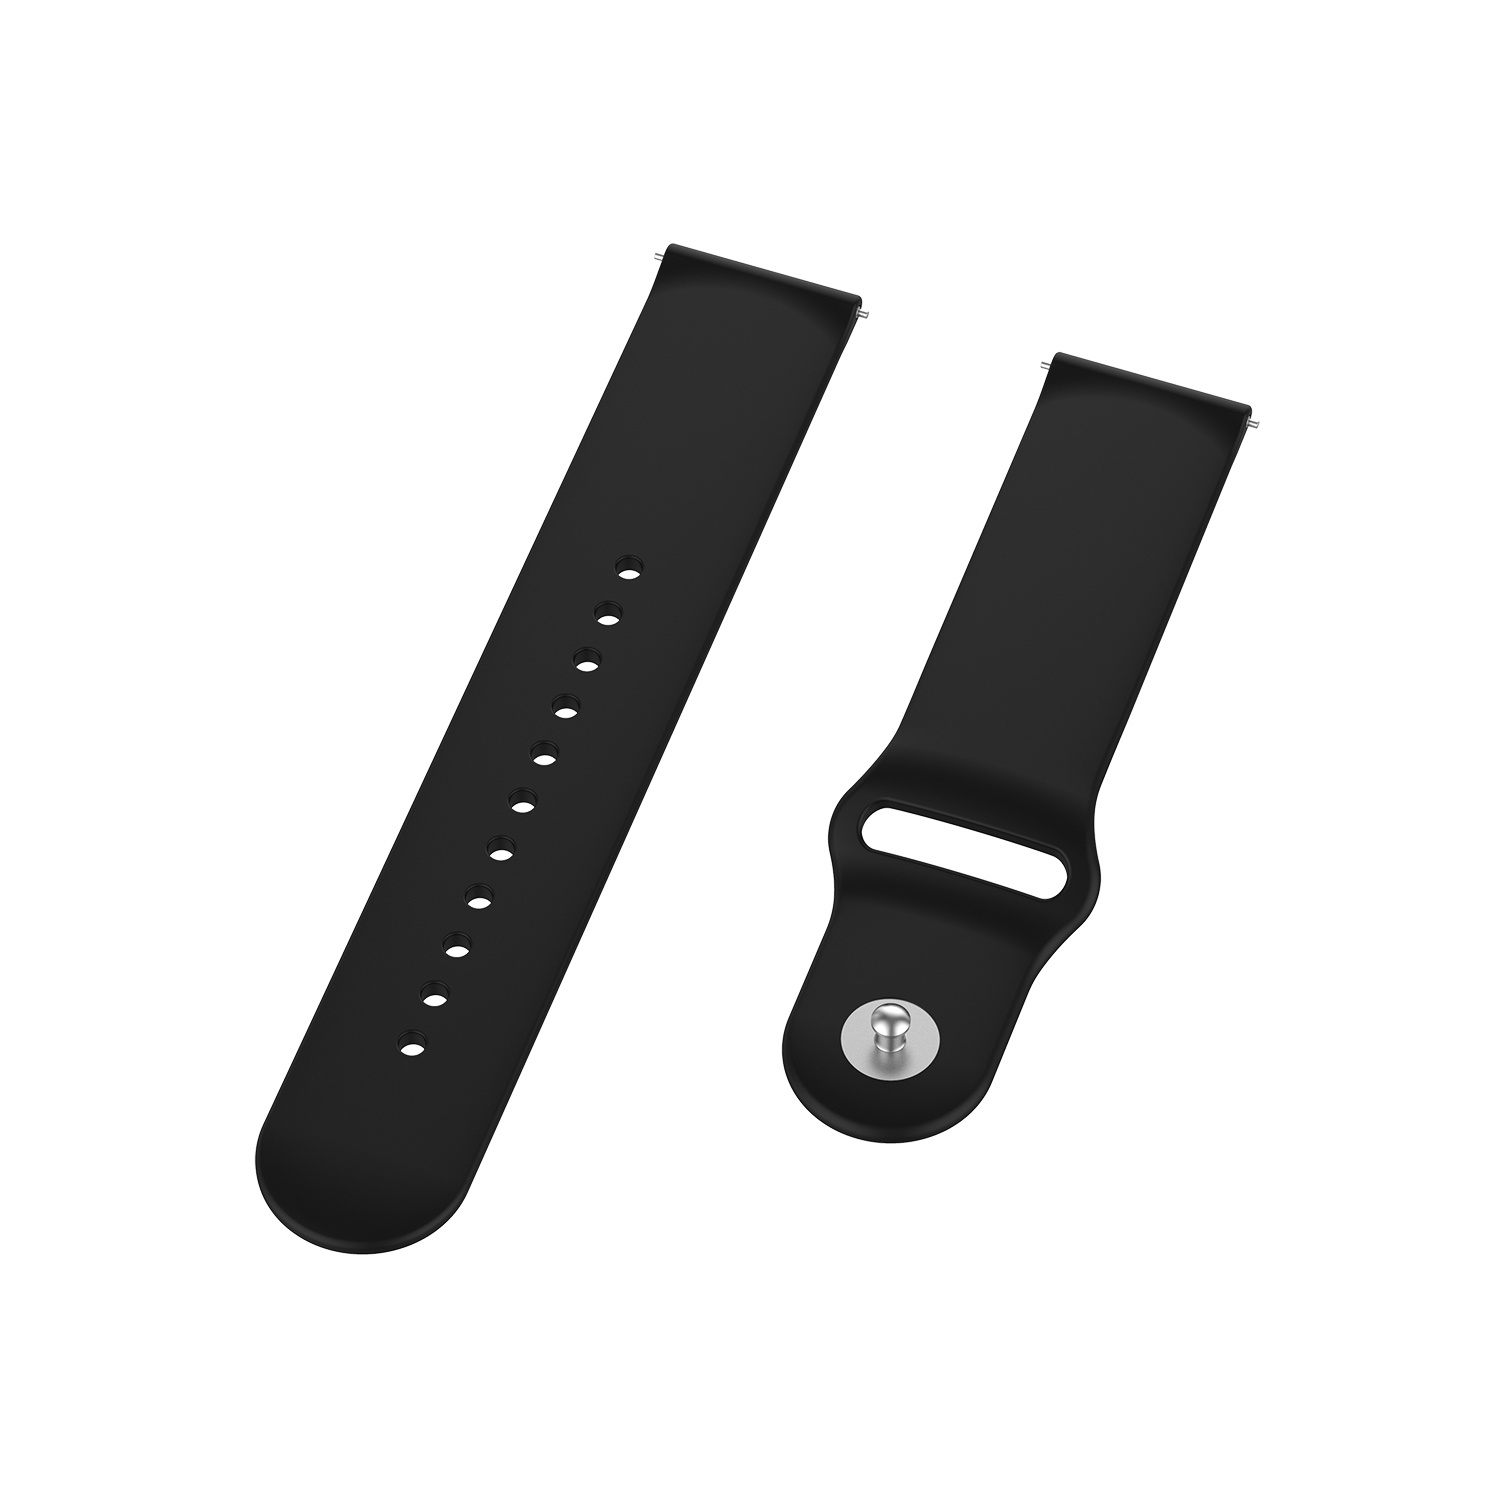 Cinturino sport in silicone per Huawei Watch GT - nero